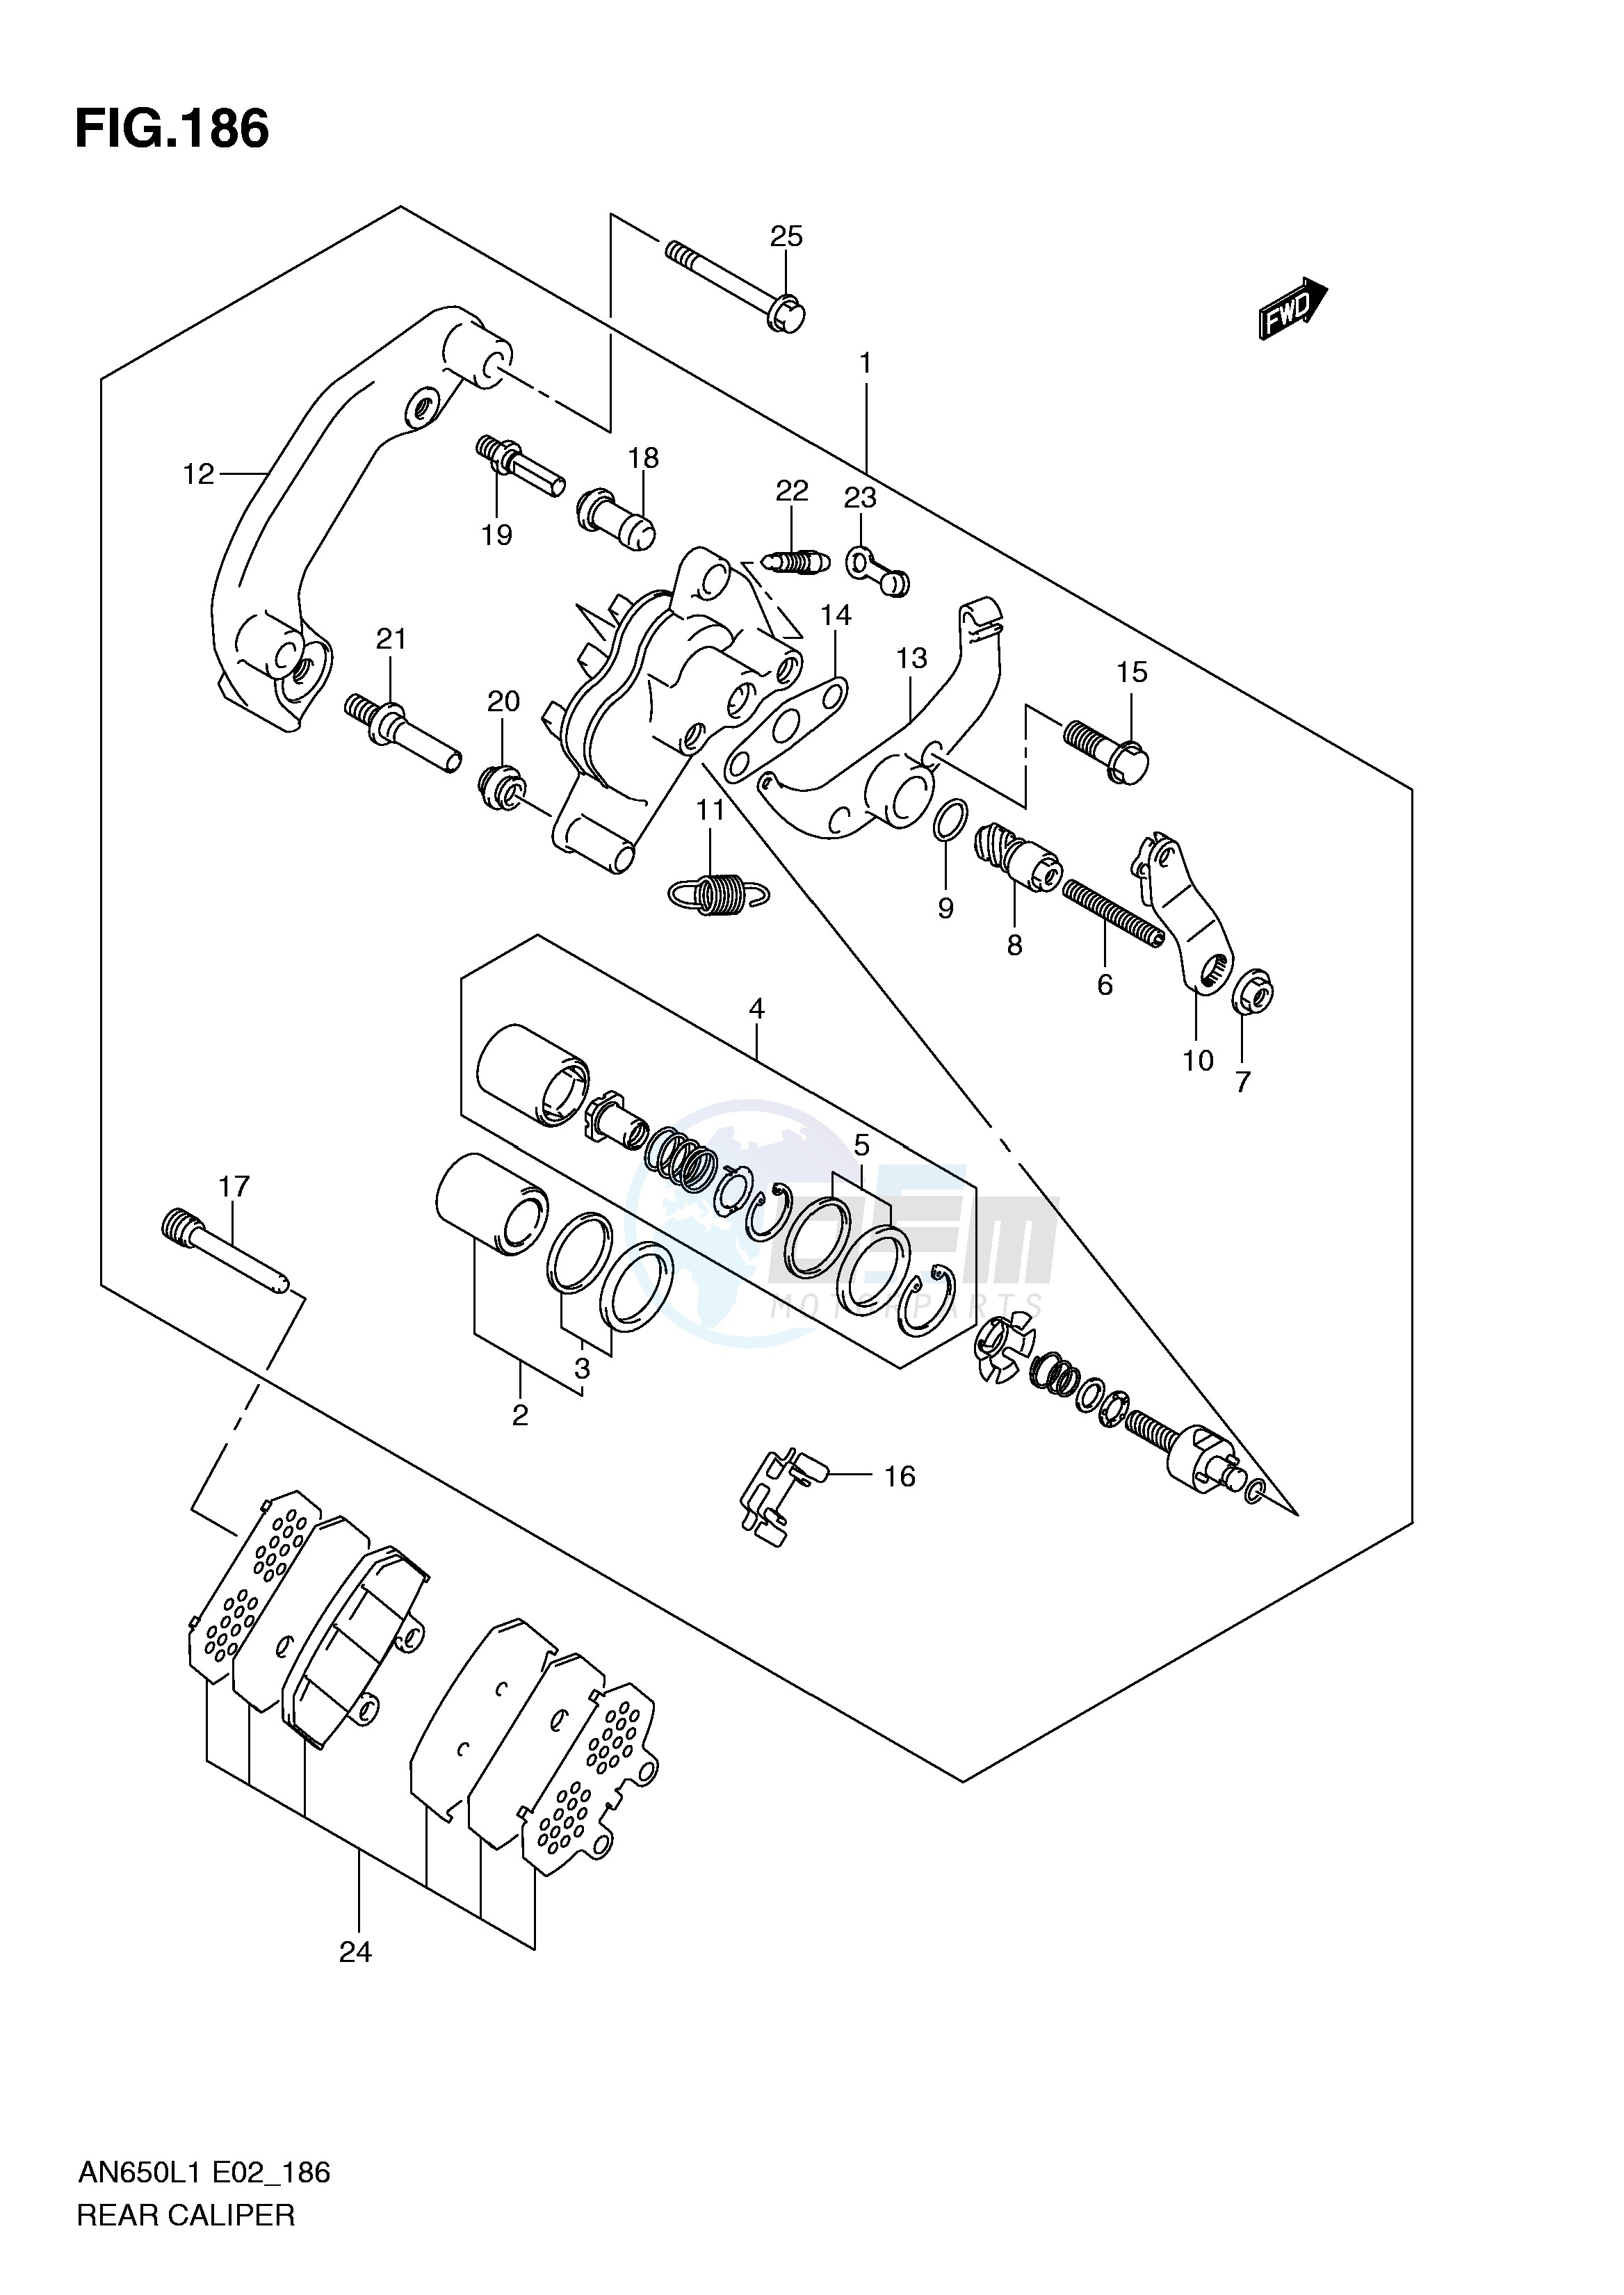 REAR CALIPER (AN650AL1 E24) blueprint